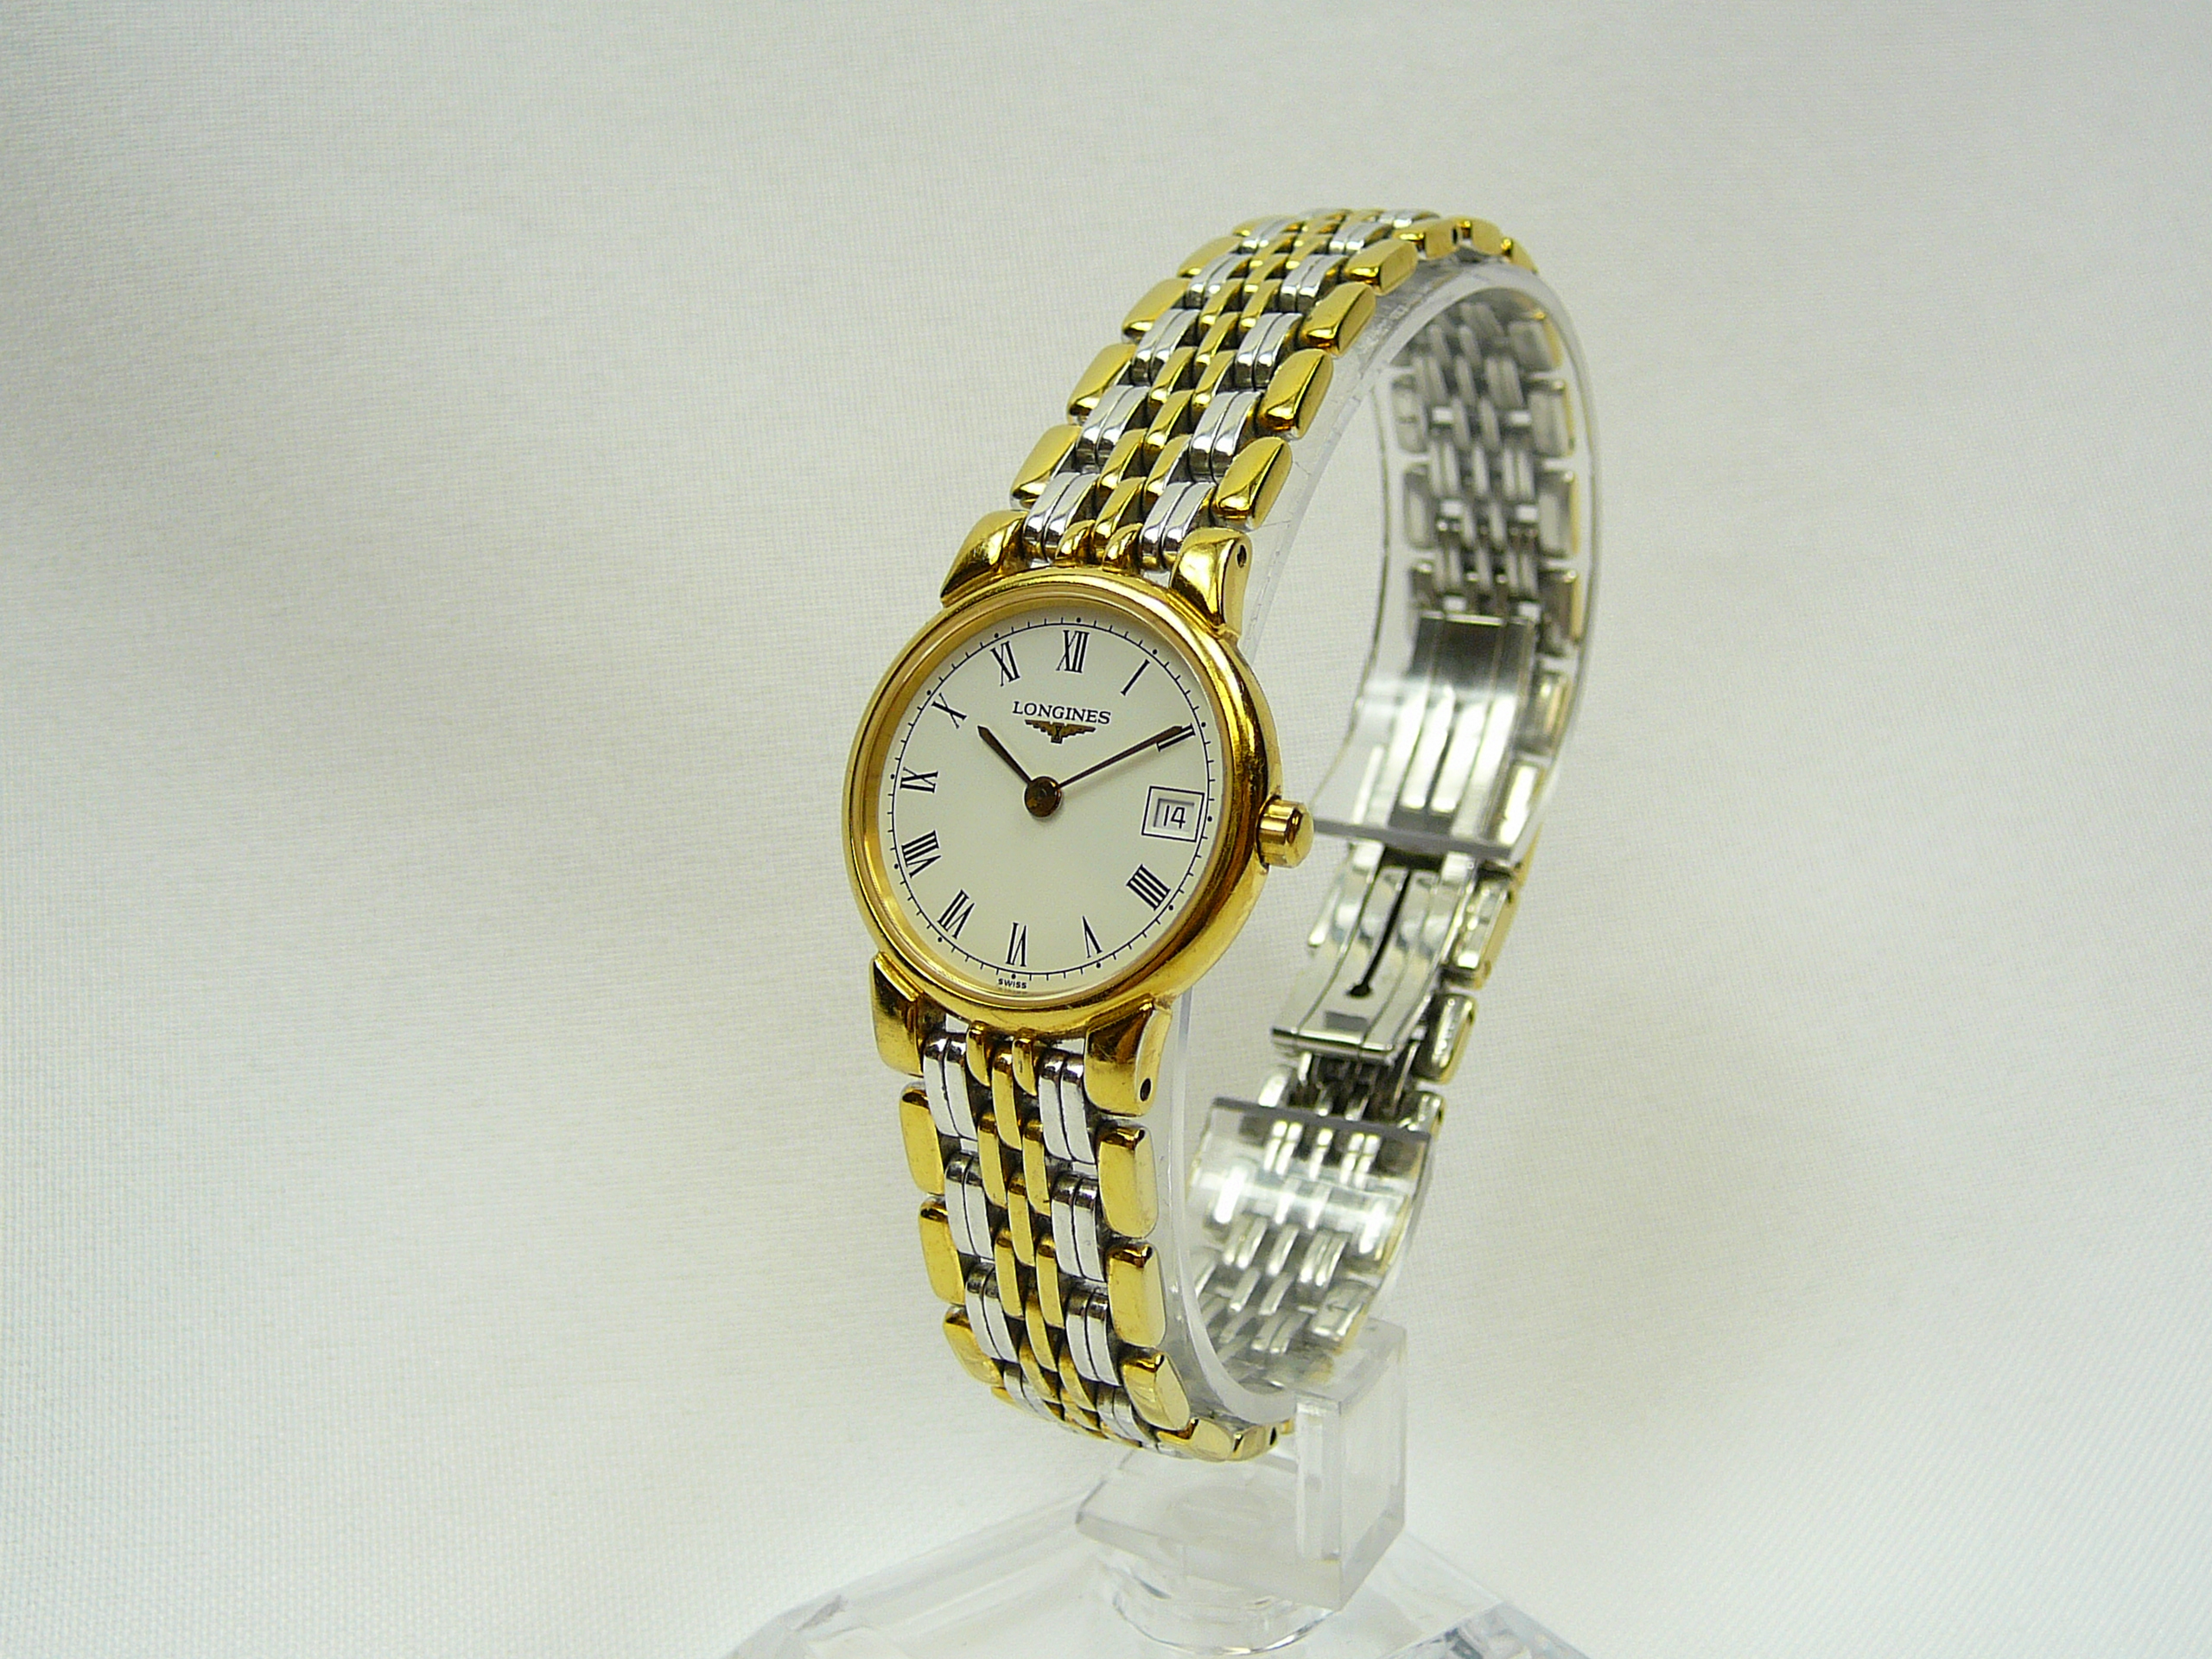 Ladies Longines Wrist Watch - Image 2 of 3